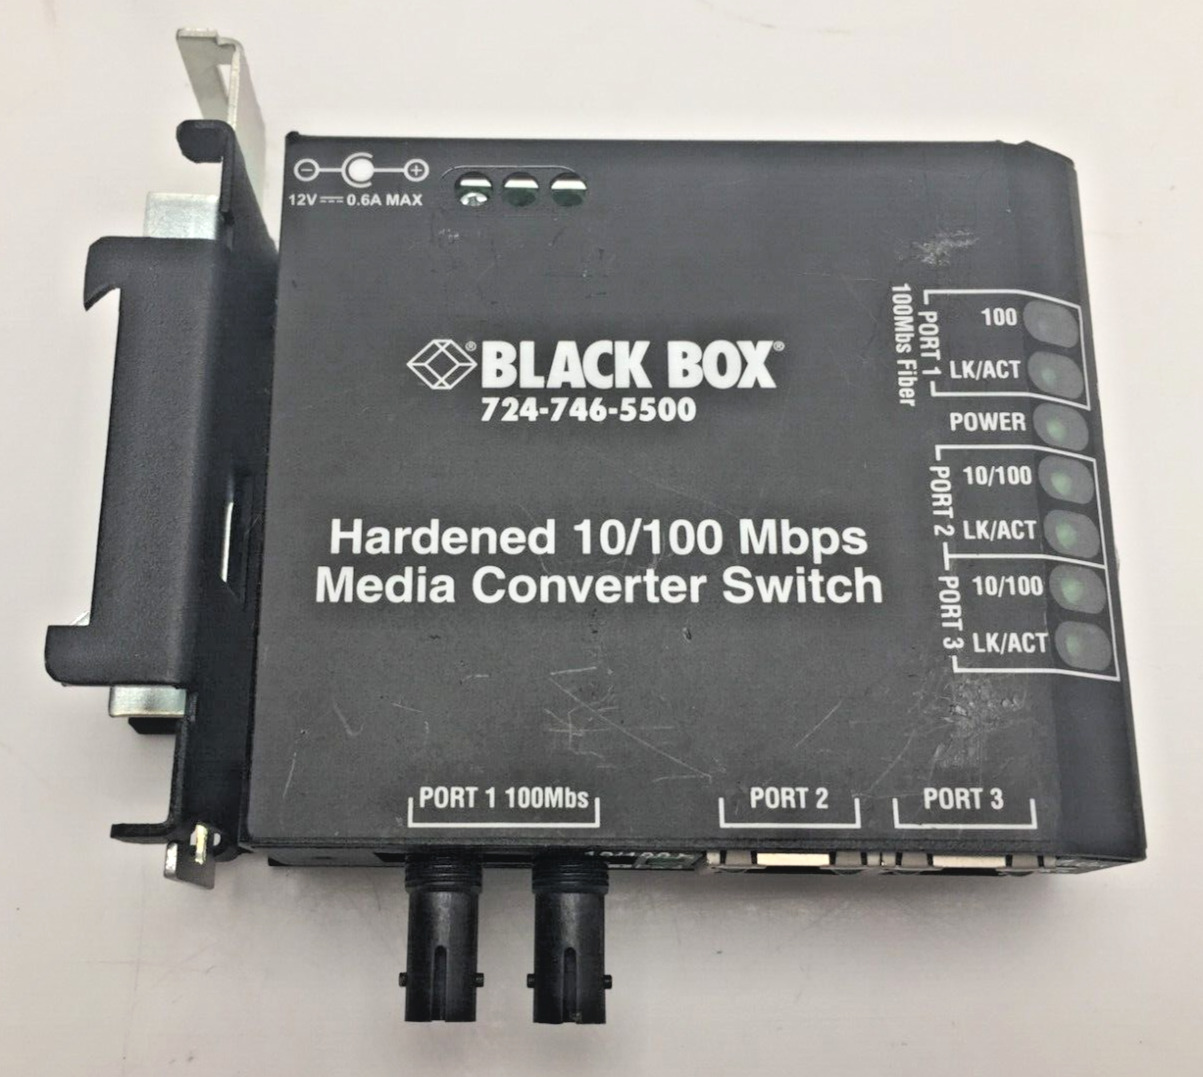 BLACK BOX HARDENED 10/100 MBPS MEDIA CONVERTER SWITCHE LB100A-HD-ST-24